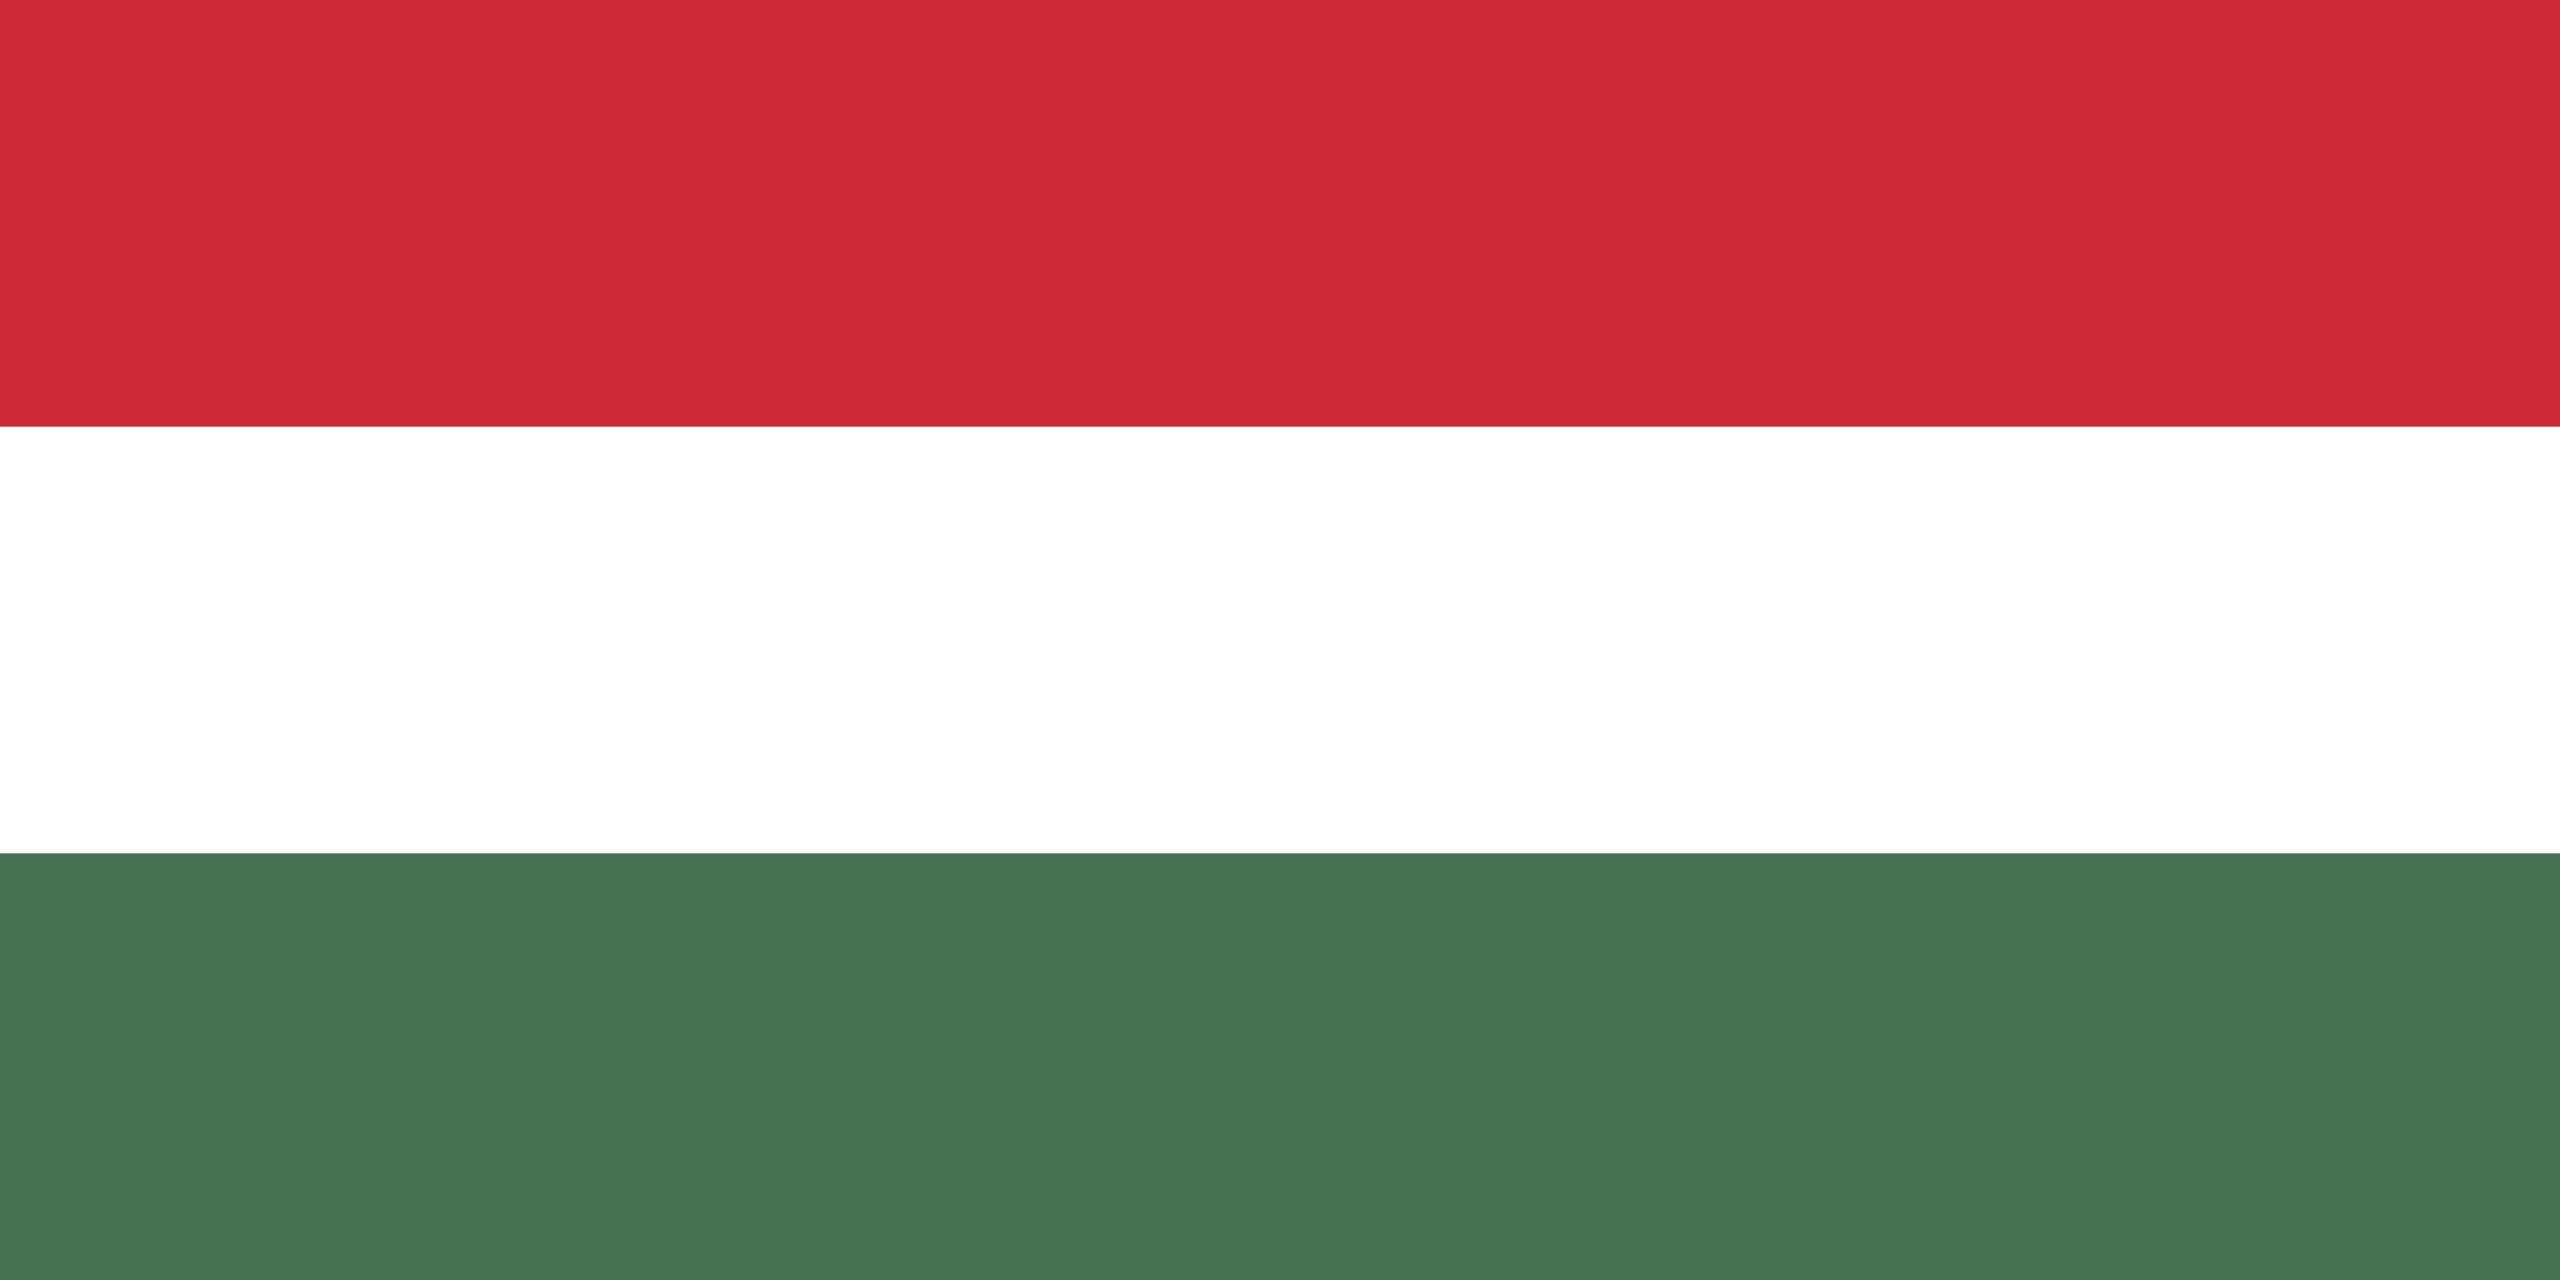 File:Hungarian flag.png